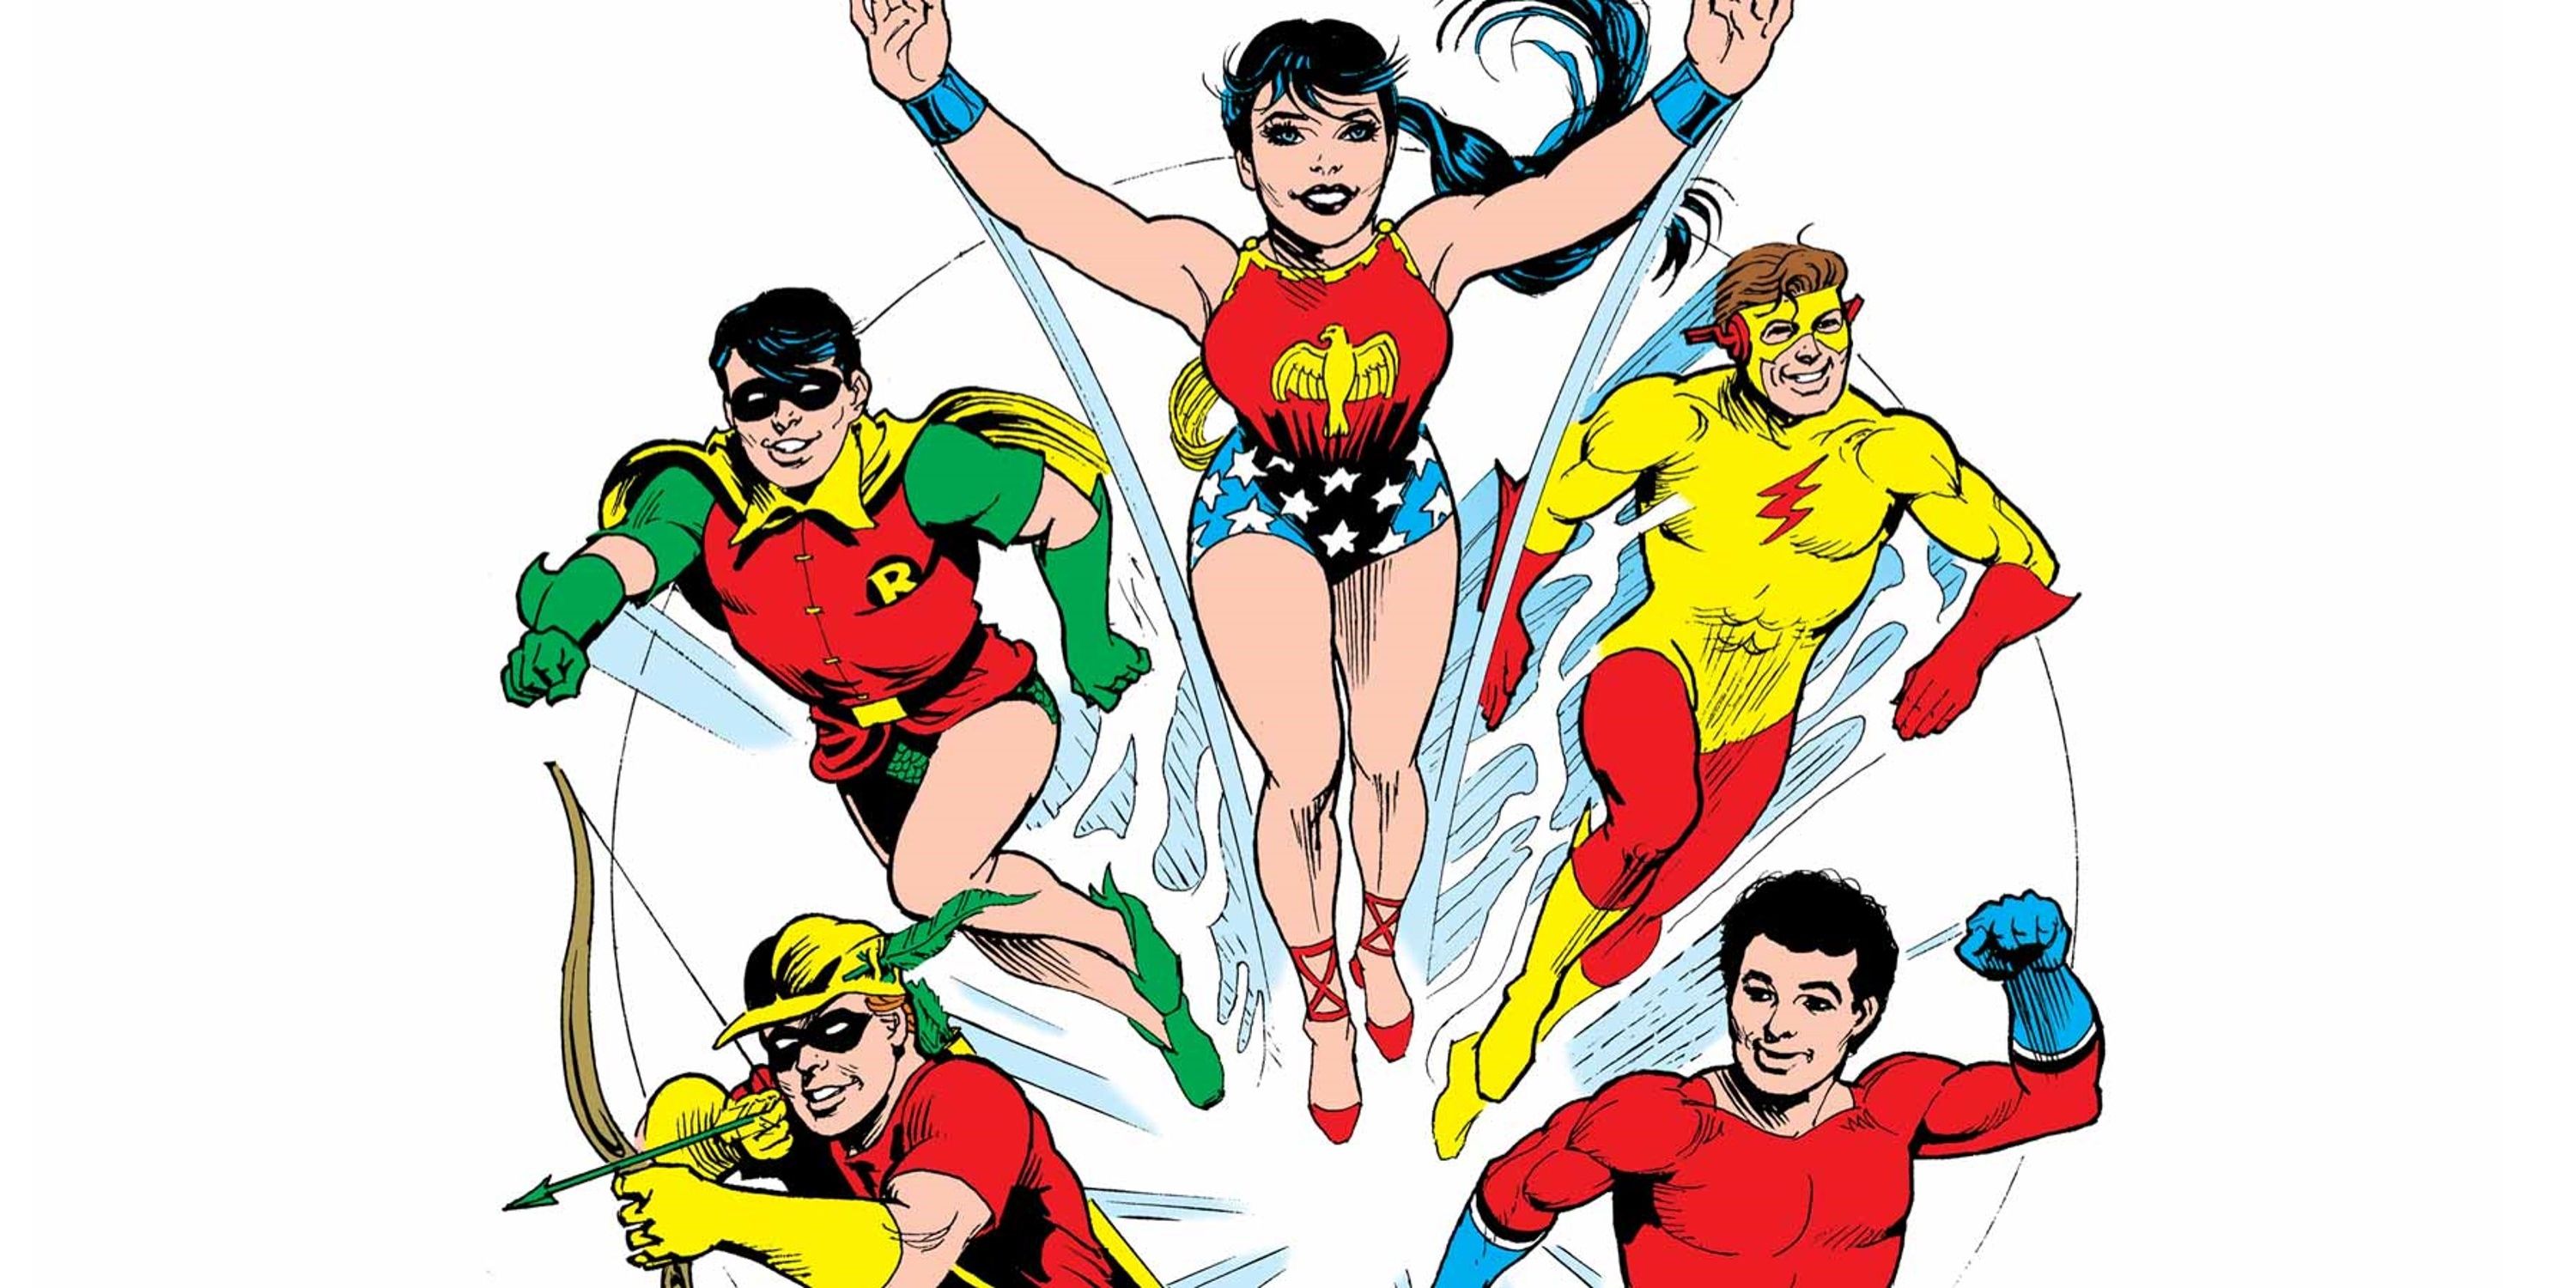 The Original Teen Titans in DC Comics: Donna Troy (Wonder Girl) Dick Grayson (Robin) Wally West (Kid Flash) Roy Harper (Speedy) Garth (Aqualad)